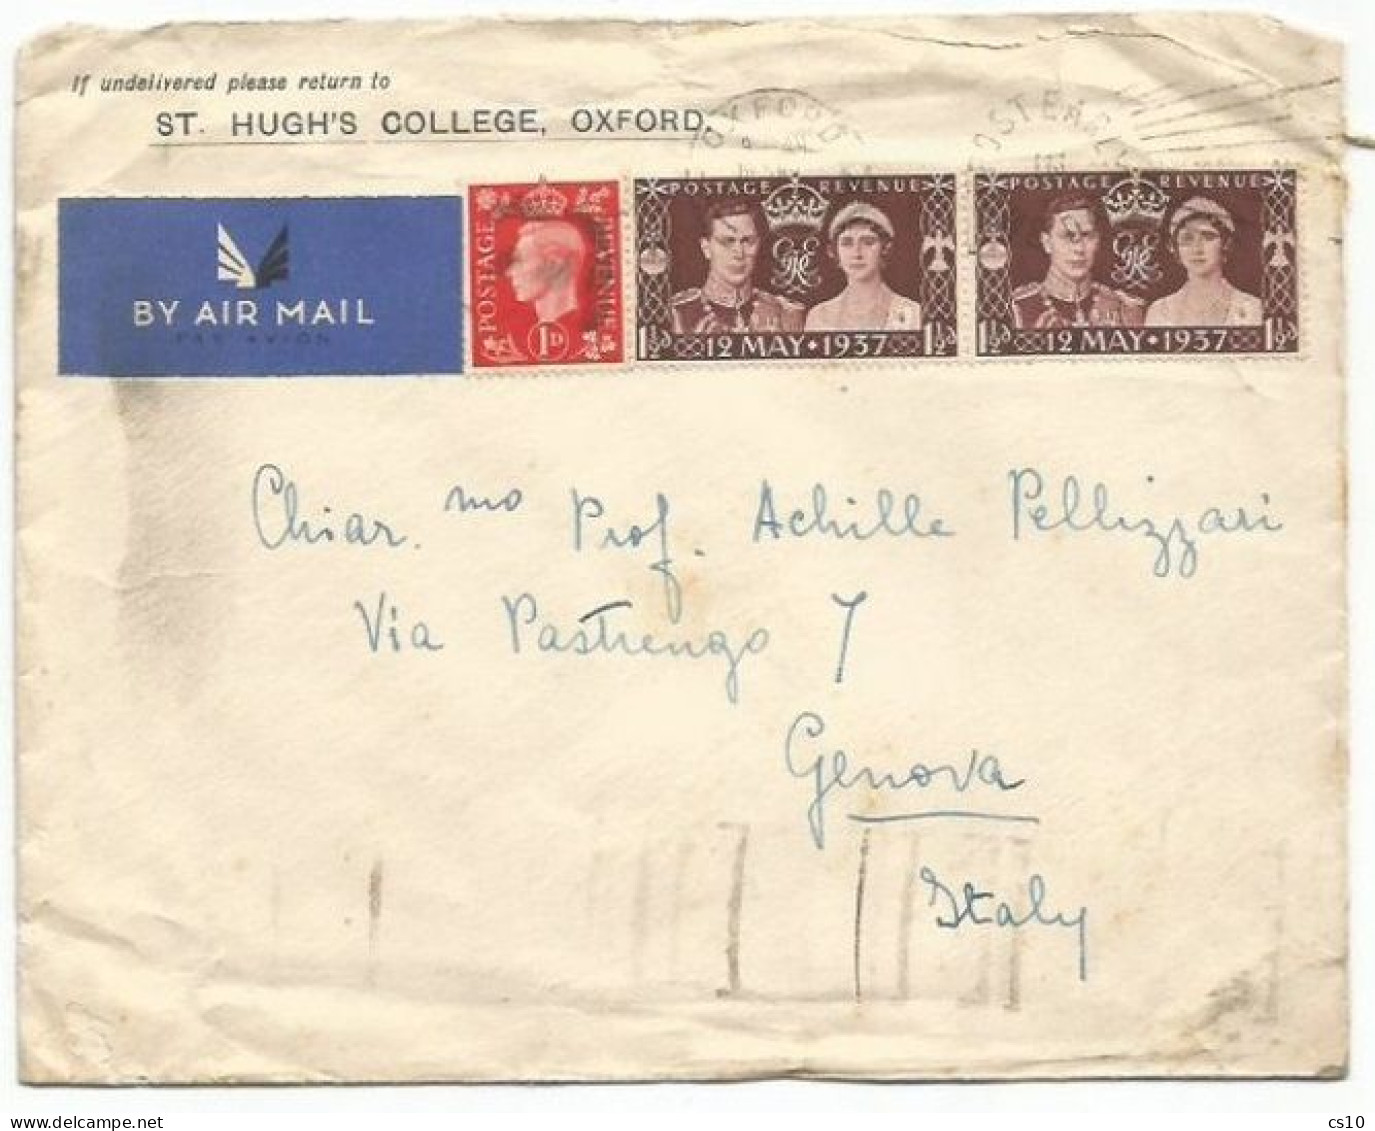 Uk Britain Coronation Day 1d5 Pair + Regular KG5 D1 AirmailCV St. Hugh's College Oxford 16jul1937 To Italy - Storia Postale